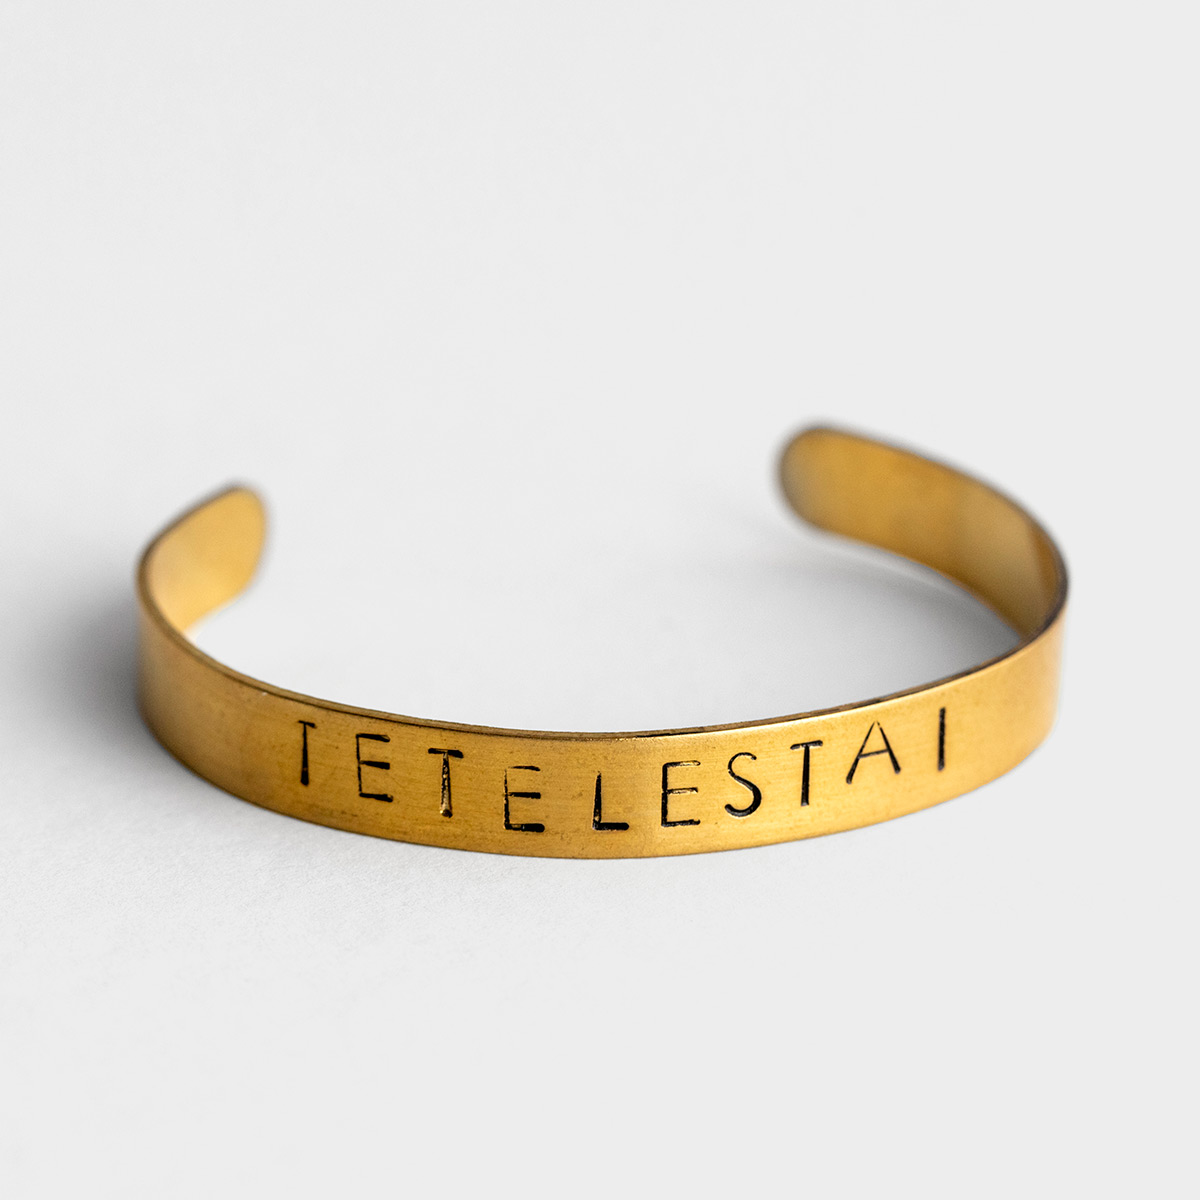 Tetelestai - Bangle Bracelet